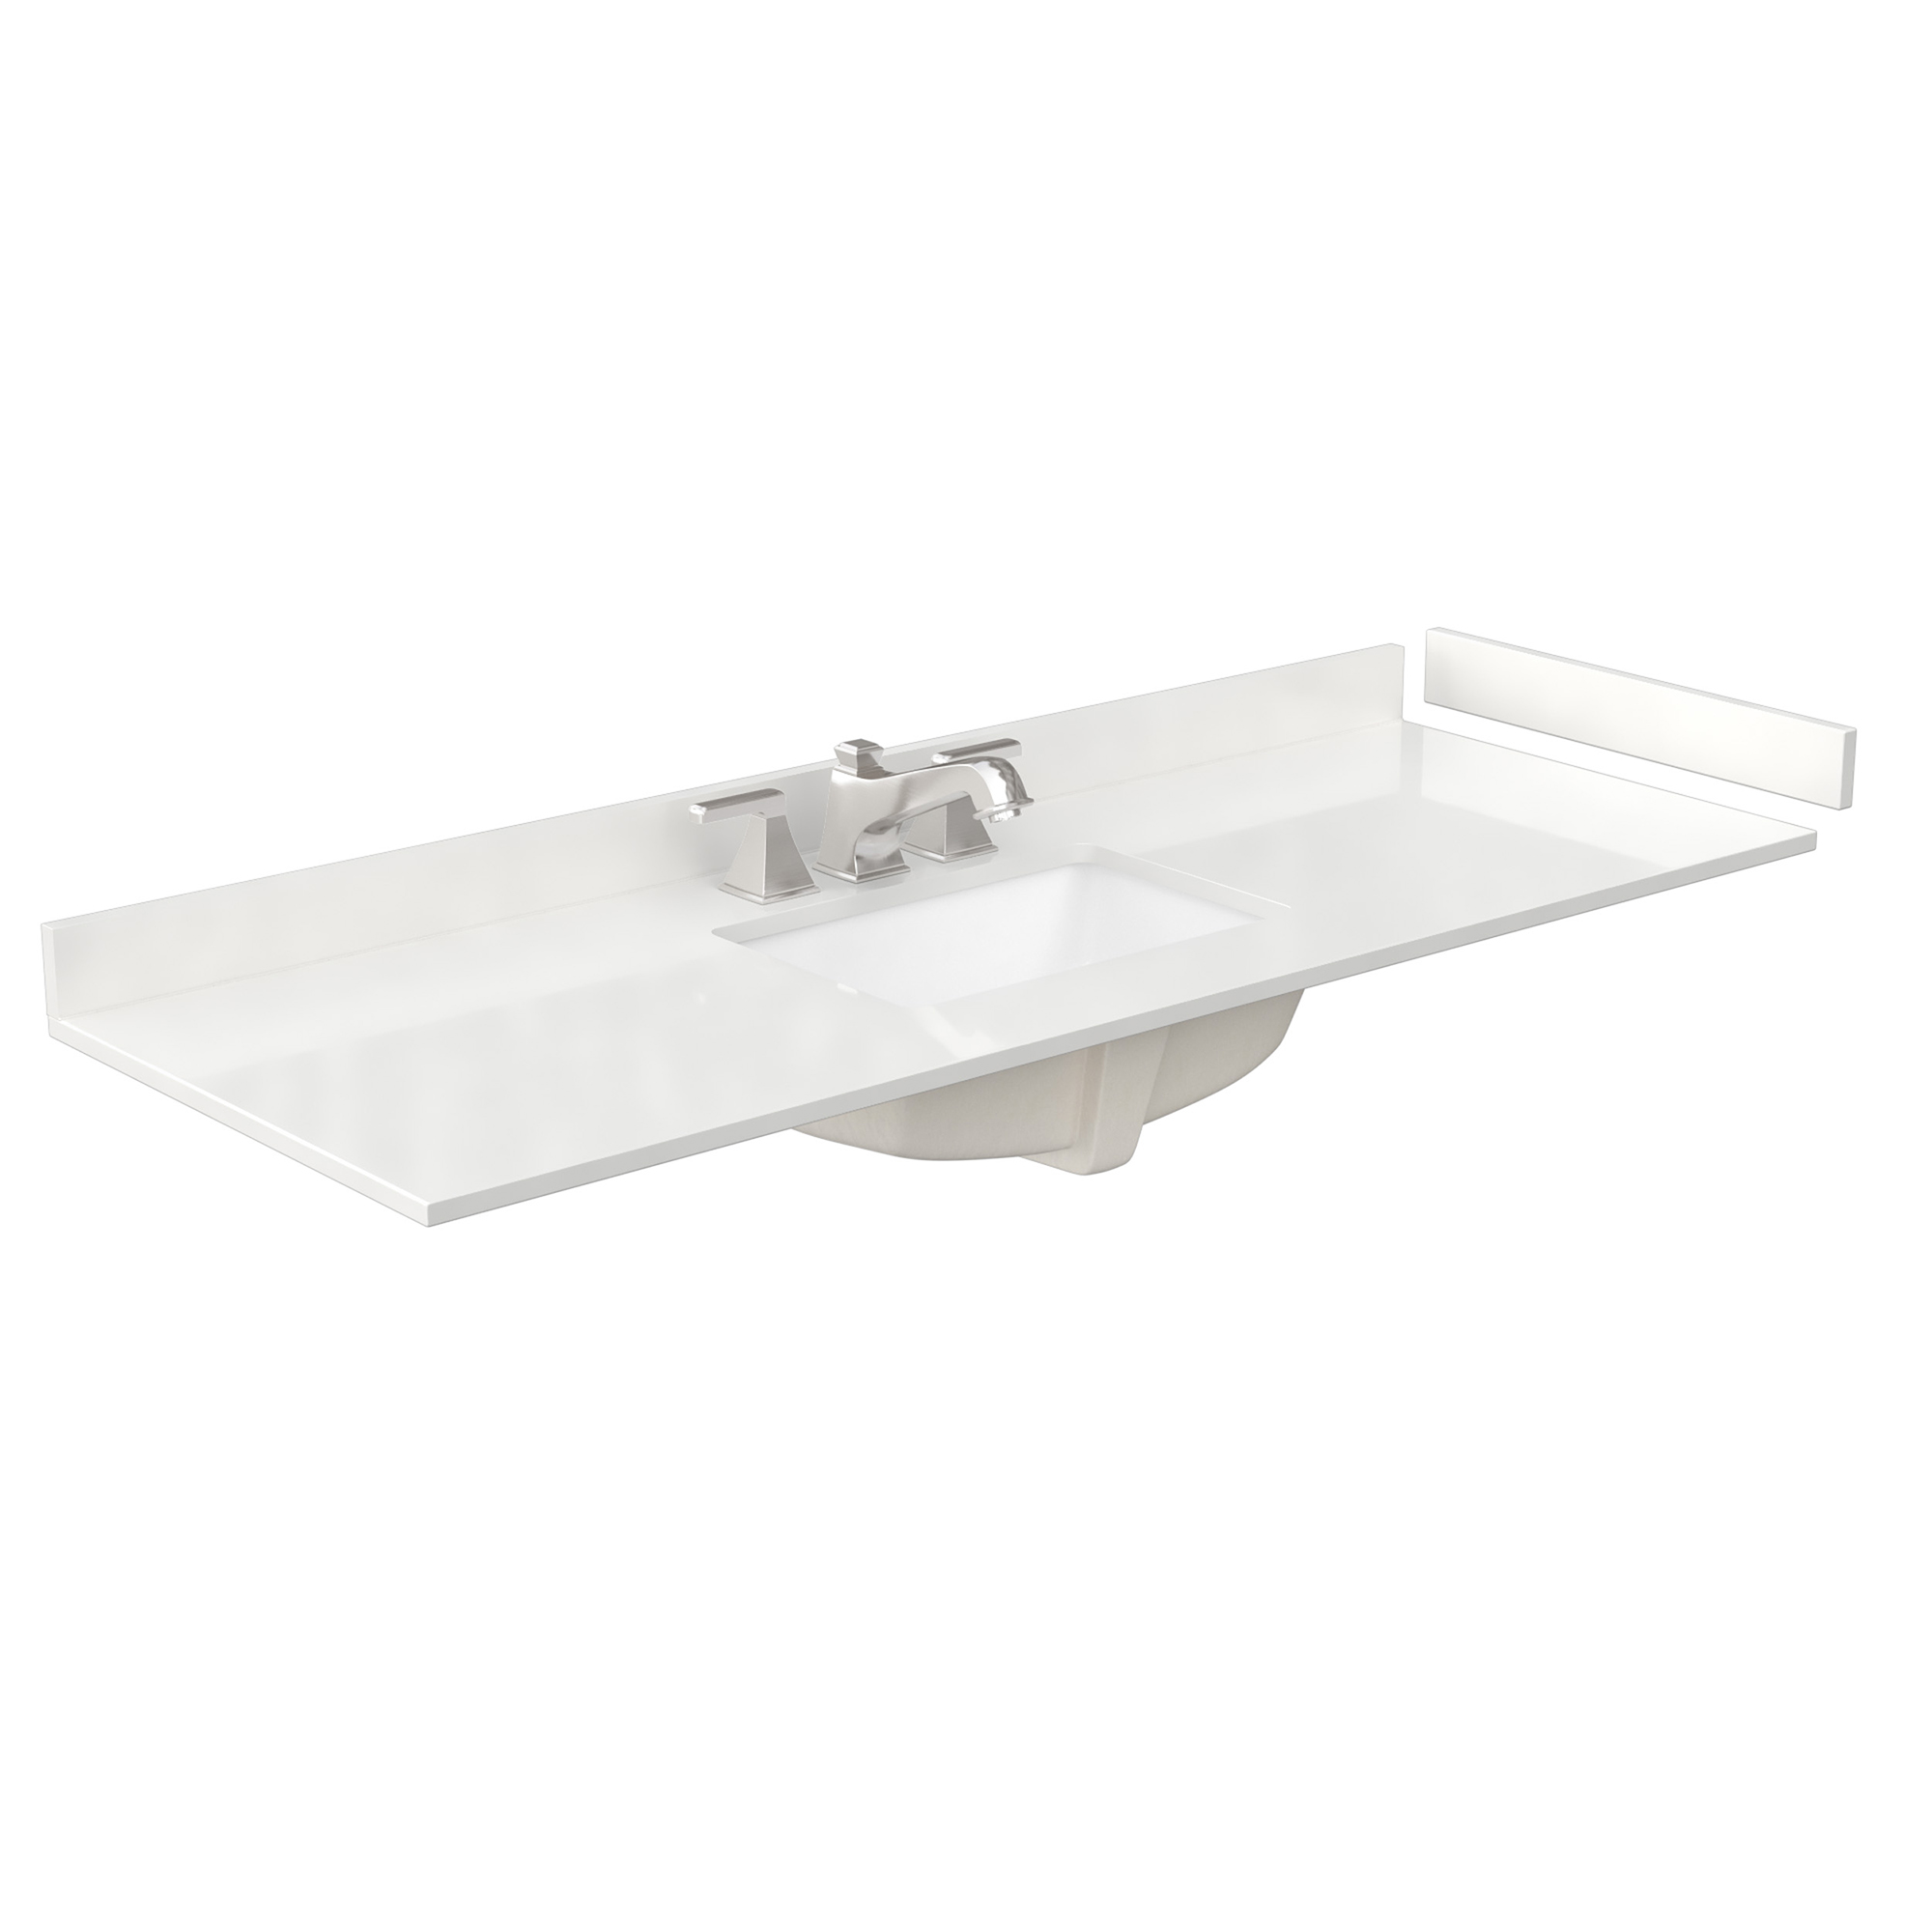 60" Single Countertop - White Quartz (1000) with Undermount Square Sink (3-Hole) - Includes Backsplash and Sidesplash WCFQC360STOPUNSWQ